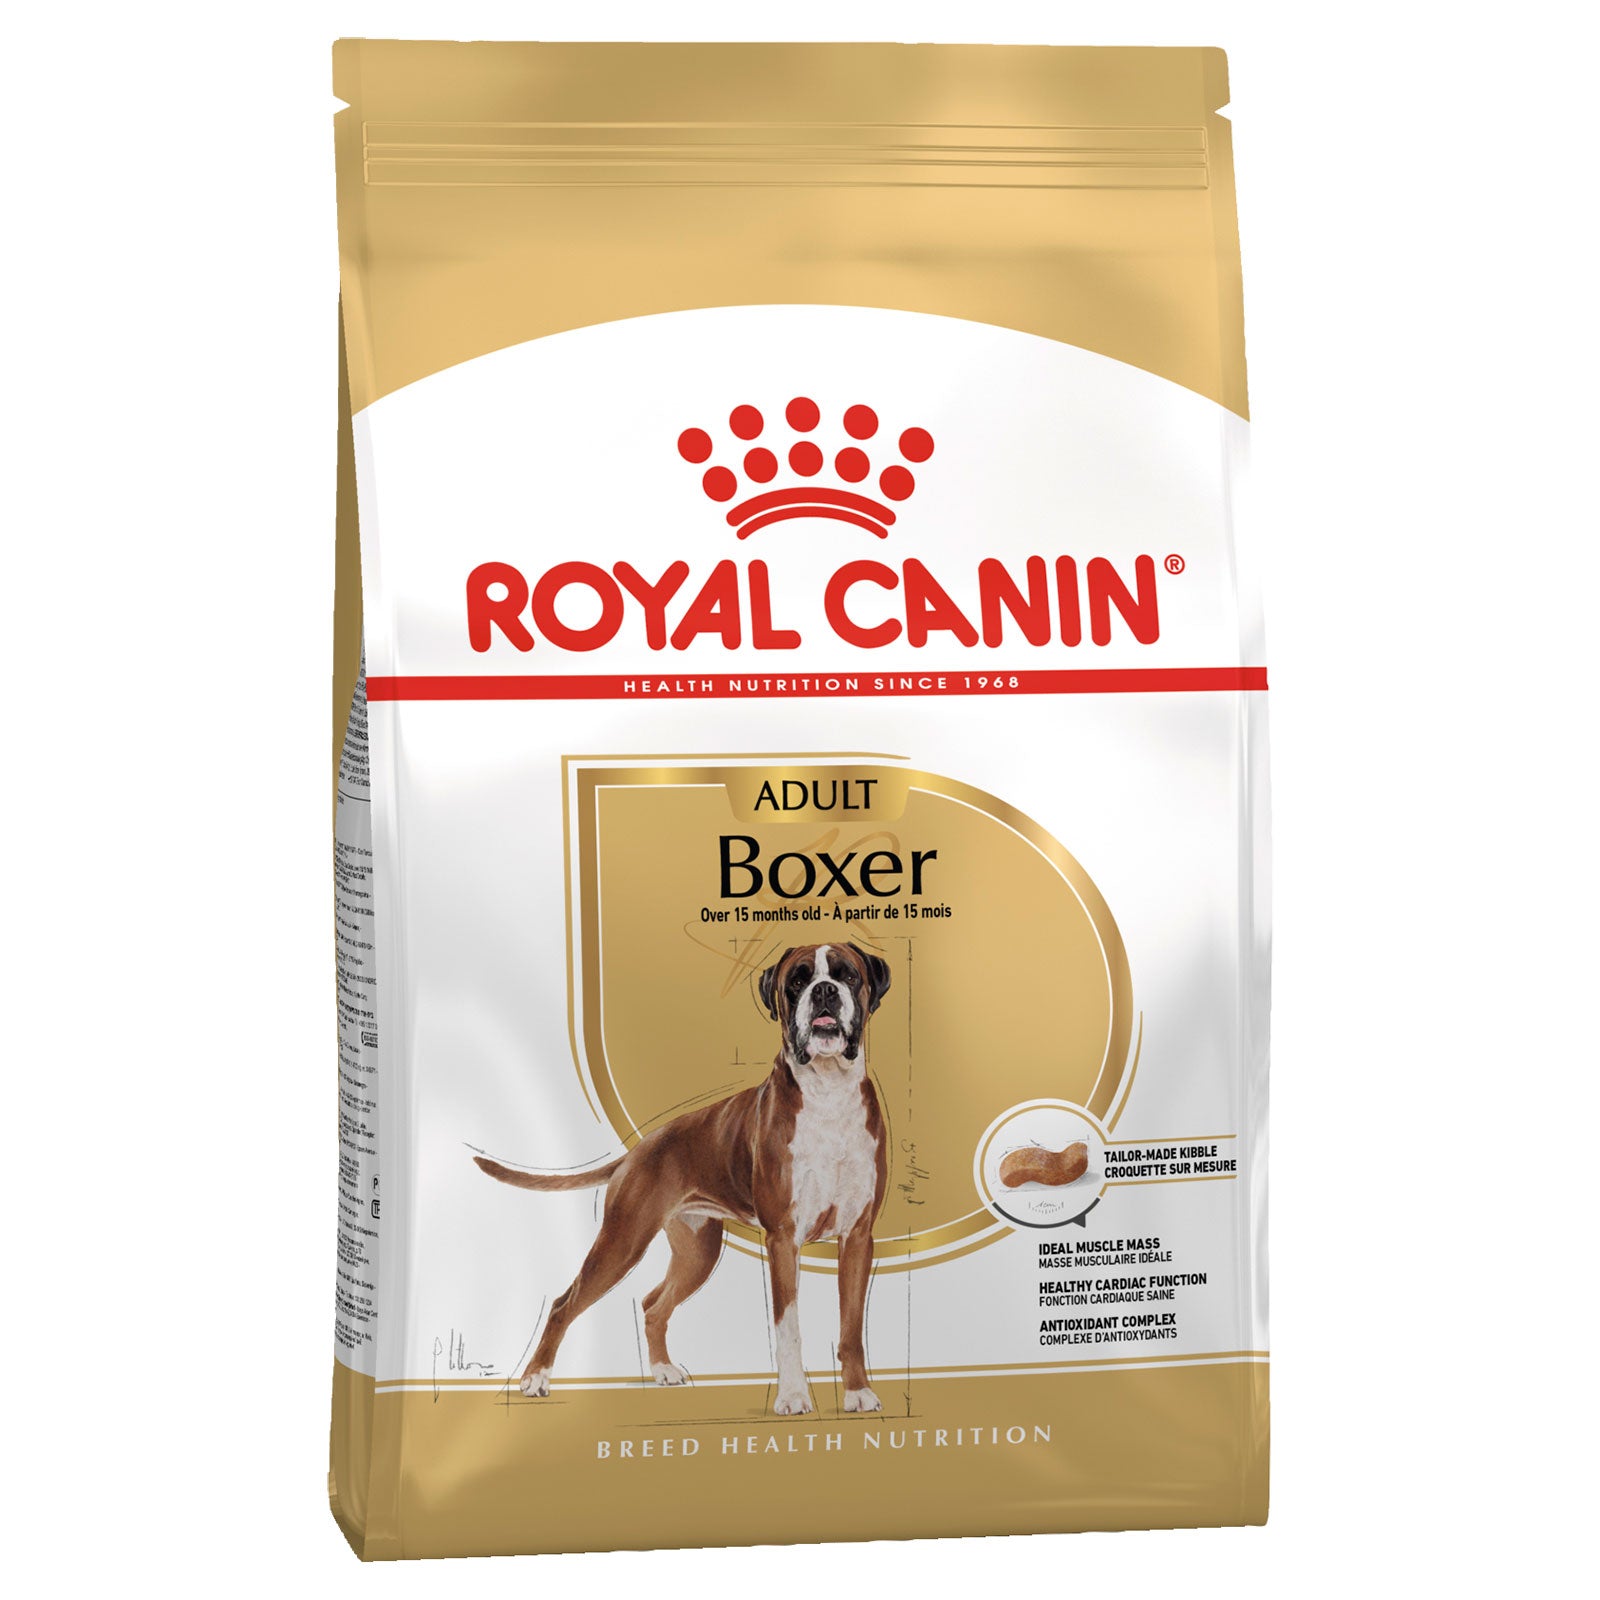 Royal Canin Dog Food Adult Boxer